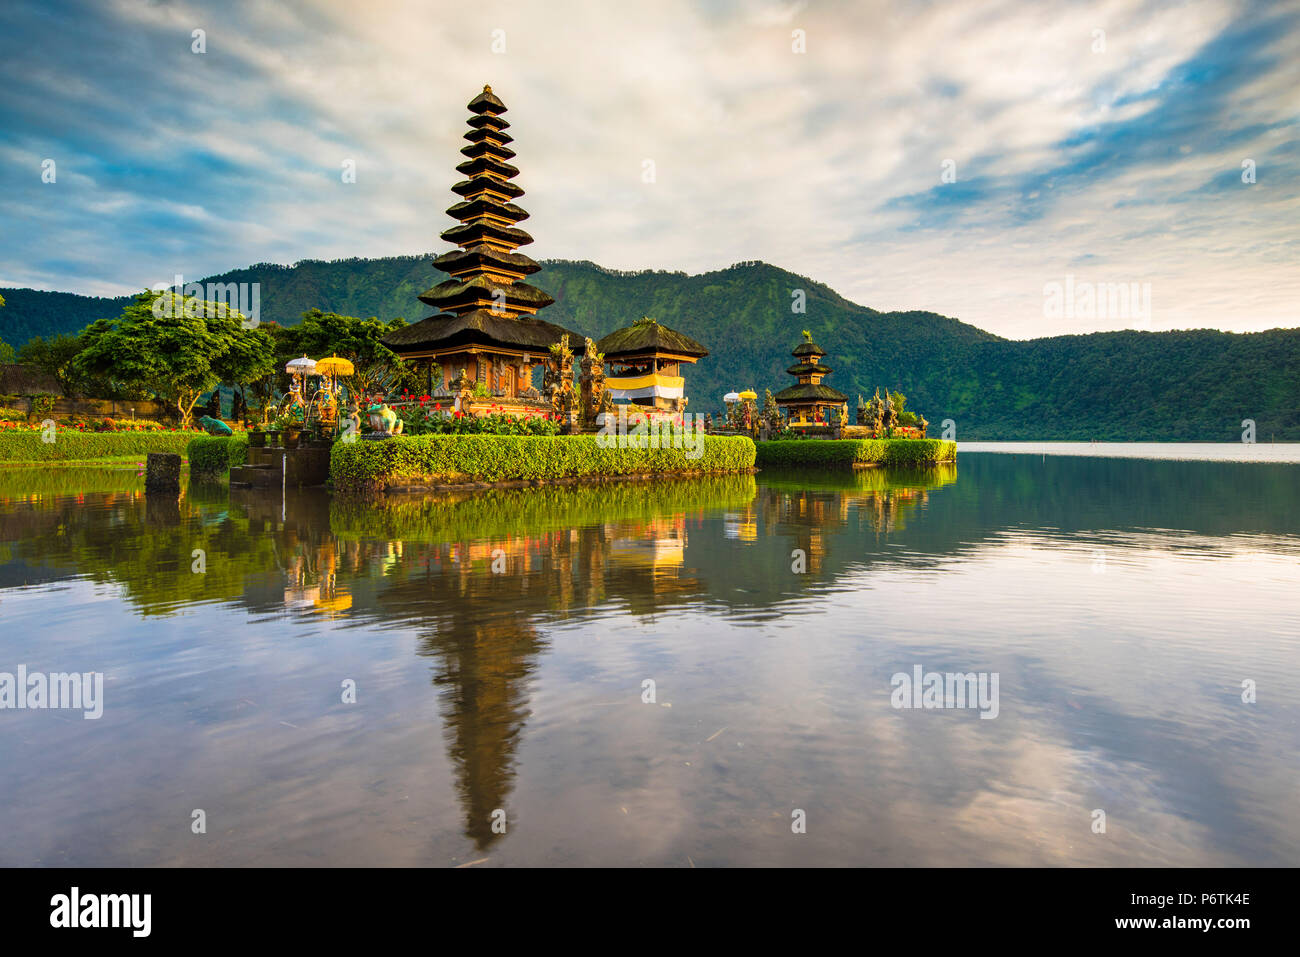 Bali, Indonesien, Südostasien. Pura Ulun Danu Bratan wasser Tempel am Rande des Lake Bratan. Stockfoto